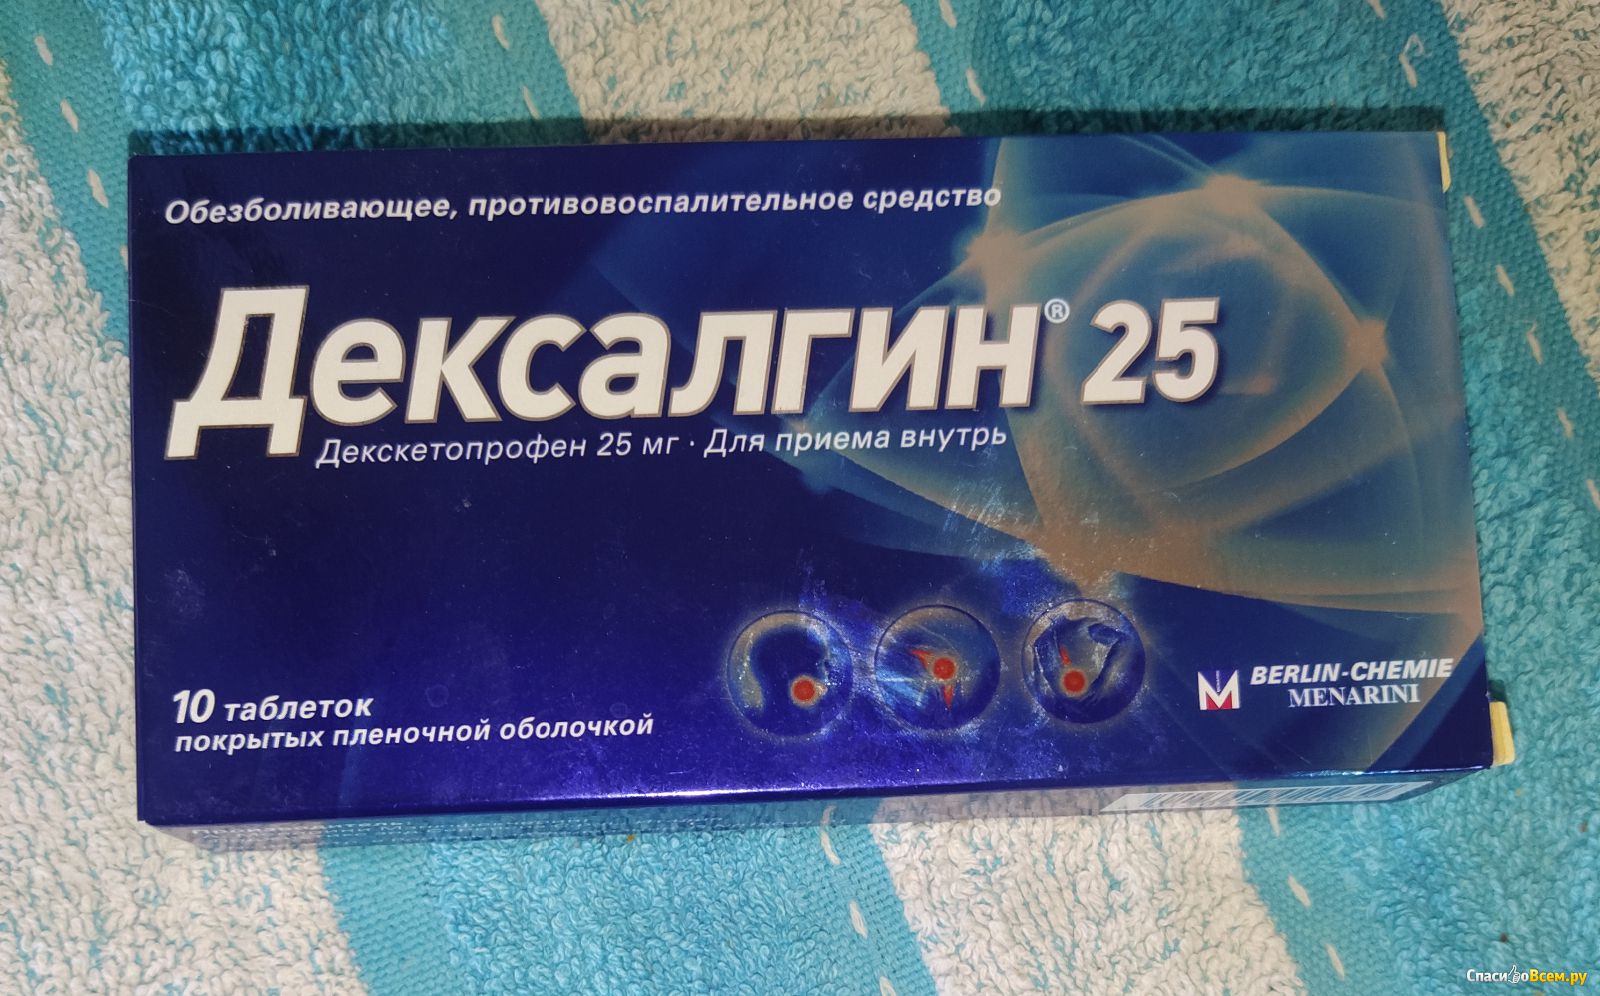 Обезболивающие таблетки от поясницы. Обезболивающие таблетки дексалгин. Дексалгин 25 таблетки красная упаковка.